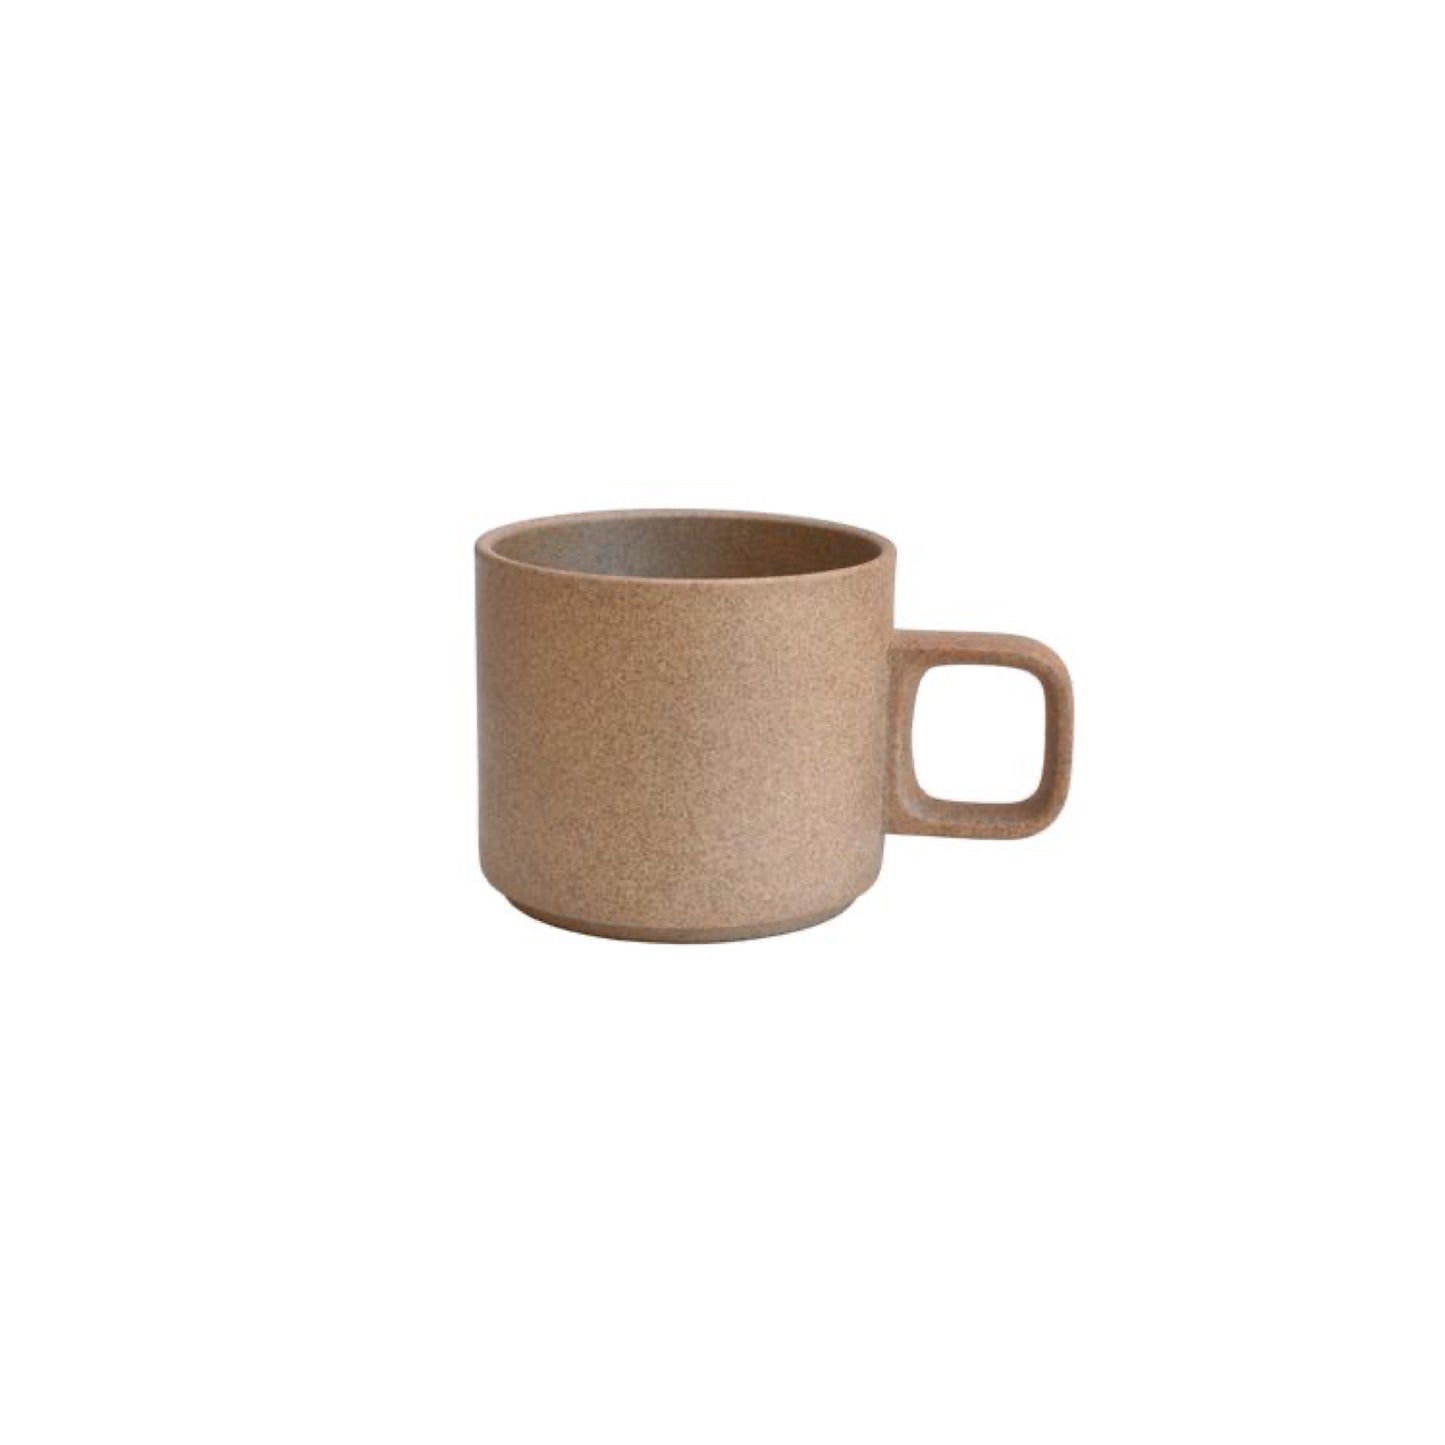 hasami porcelain / mug - natural